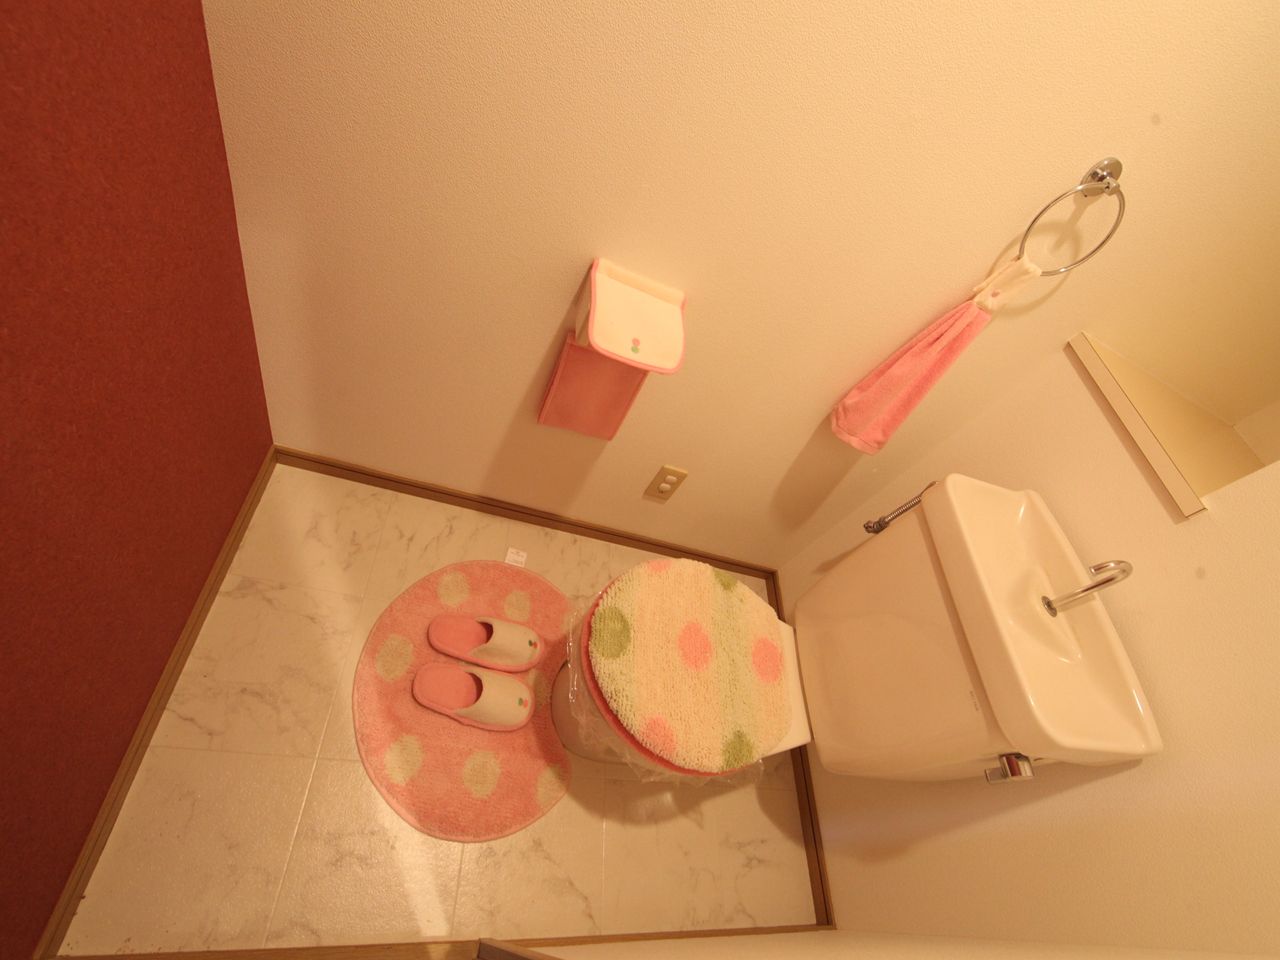 Toilet. toilet Warm water washing toilet seat mounting Allowed